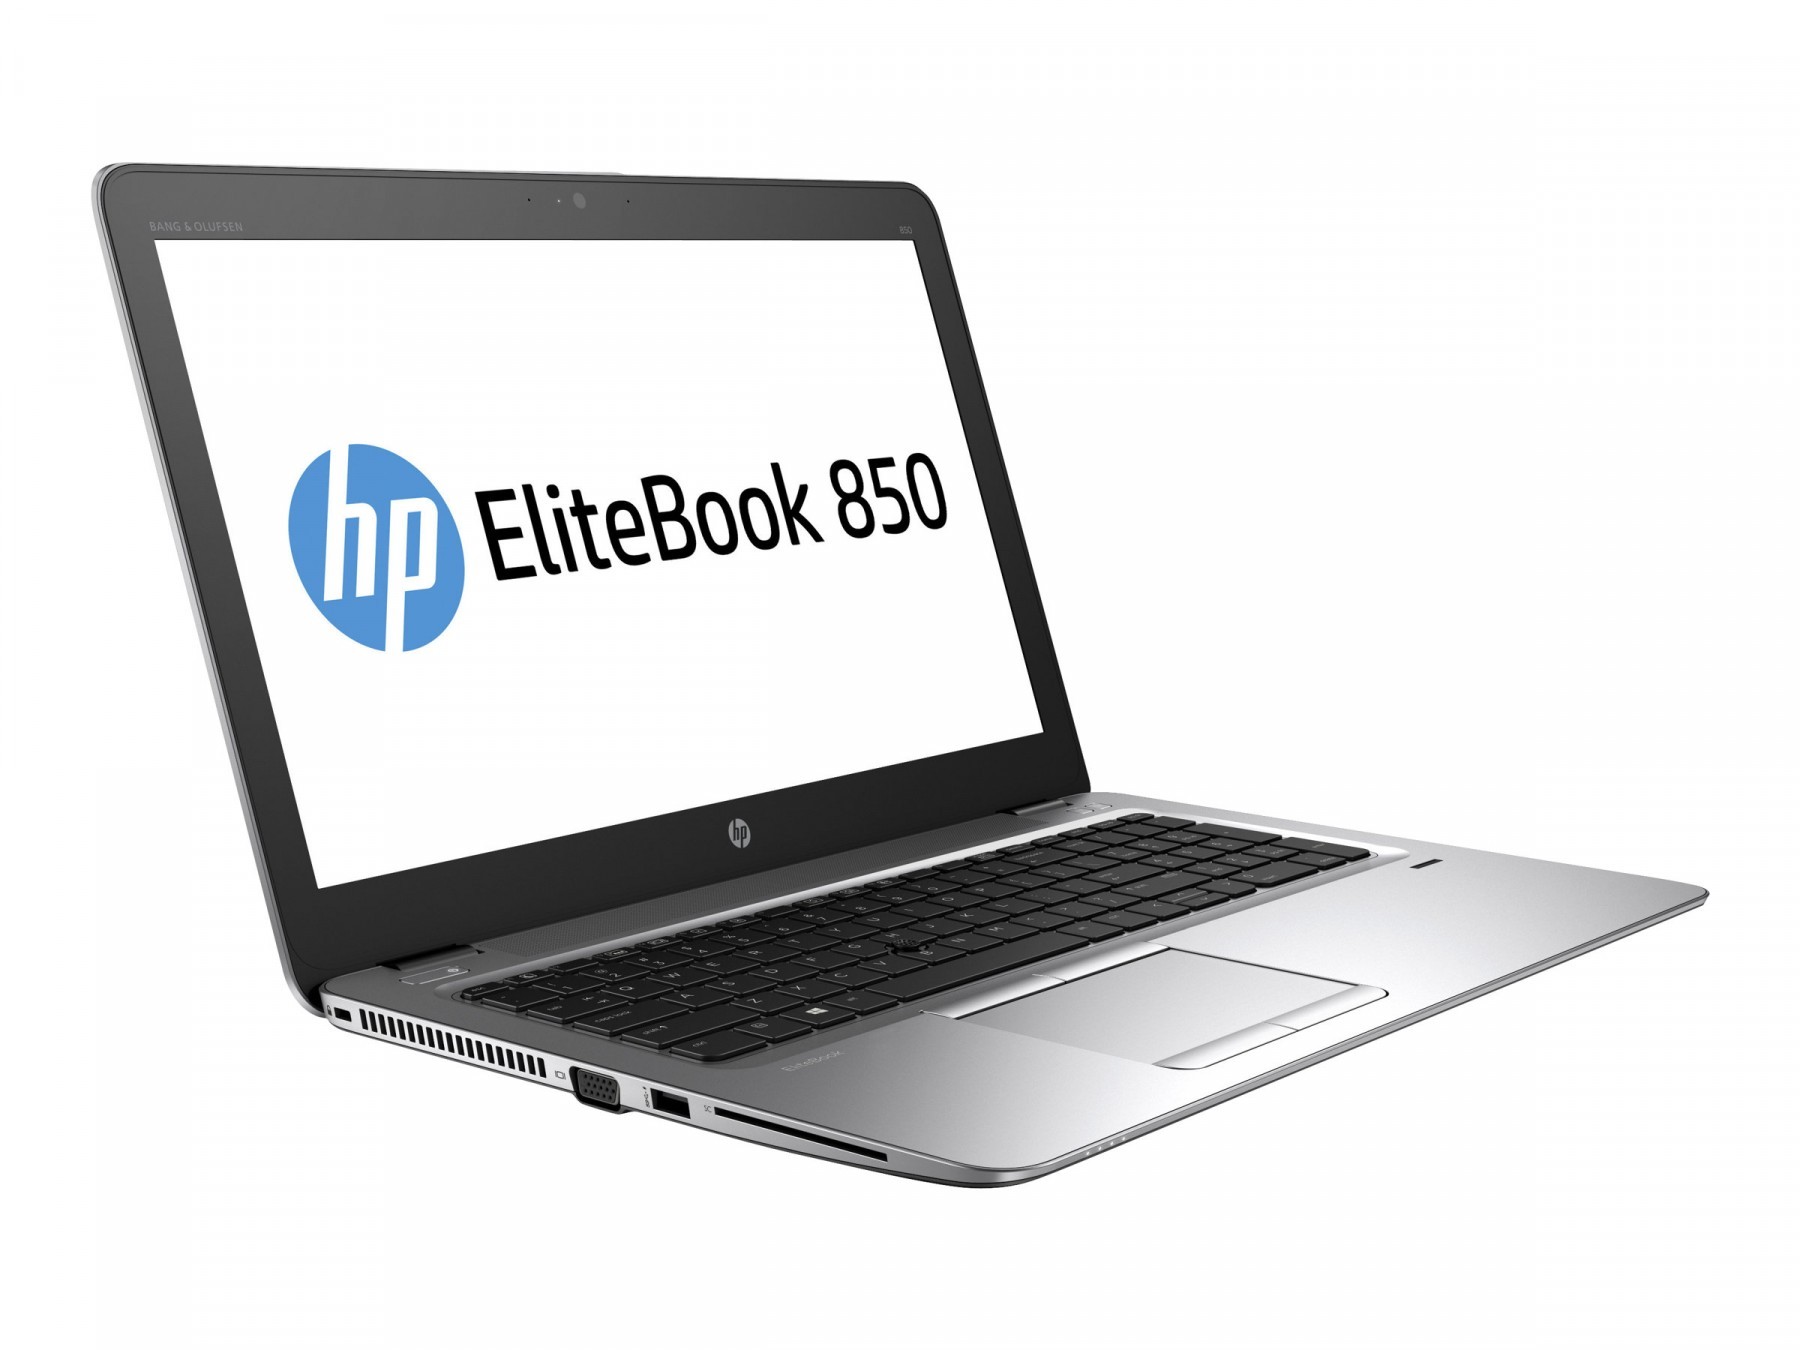 HP-EB-850-G3-LAP-I5-256GB-HP EliteBook 850 G3 Refurbished Laptop 15-inch 256 GB SSD 8 GB RAM Core i5 Windows 10 Professional-image